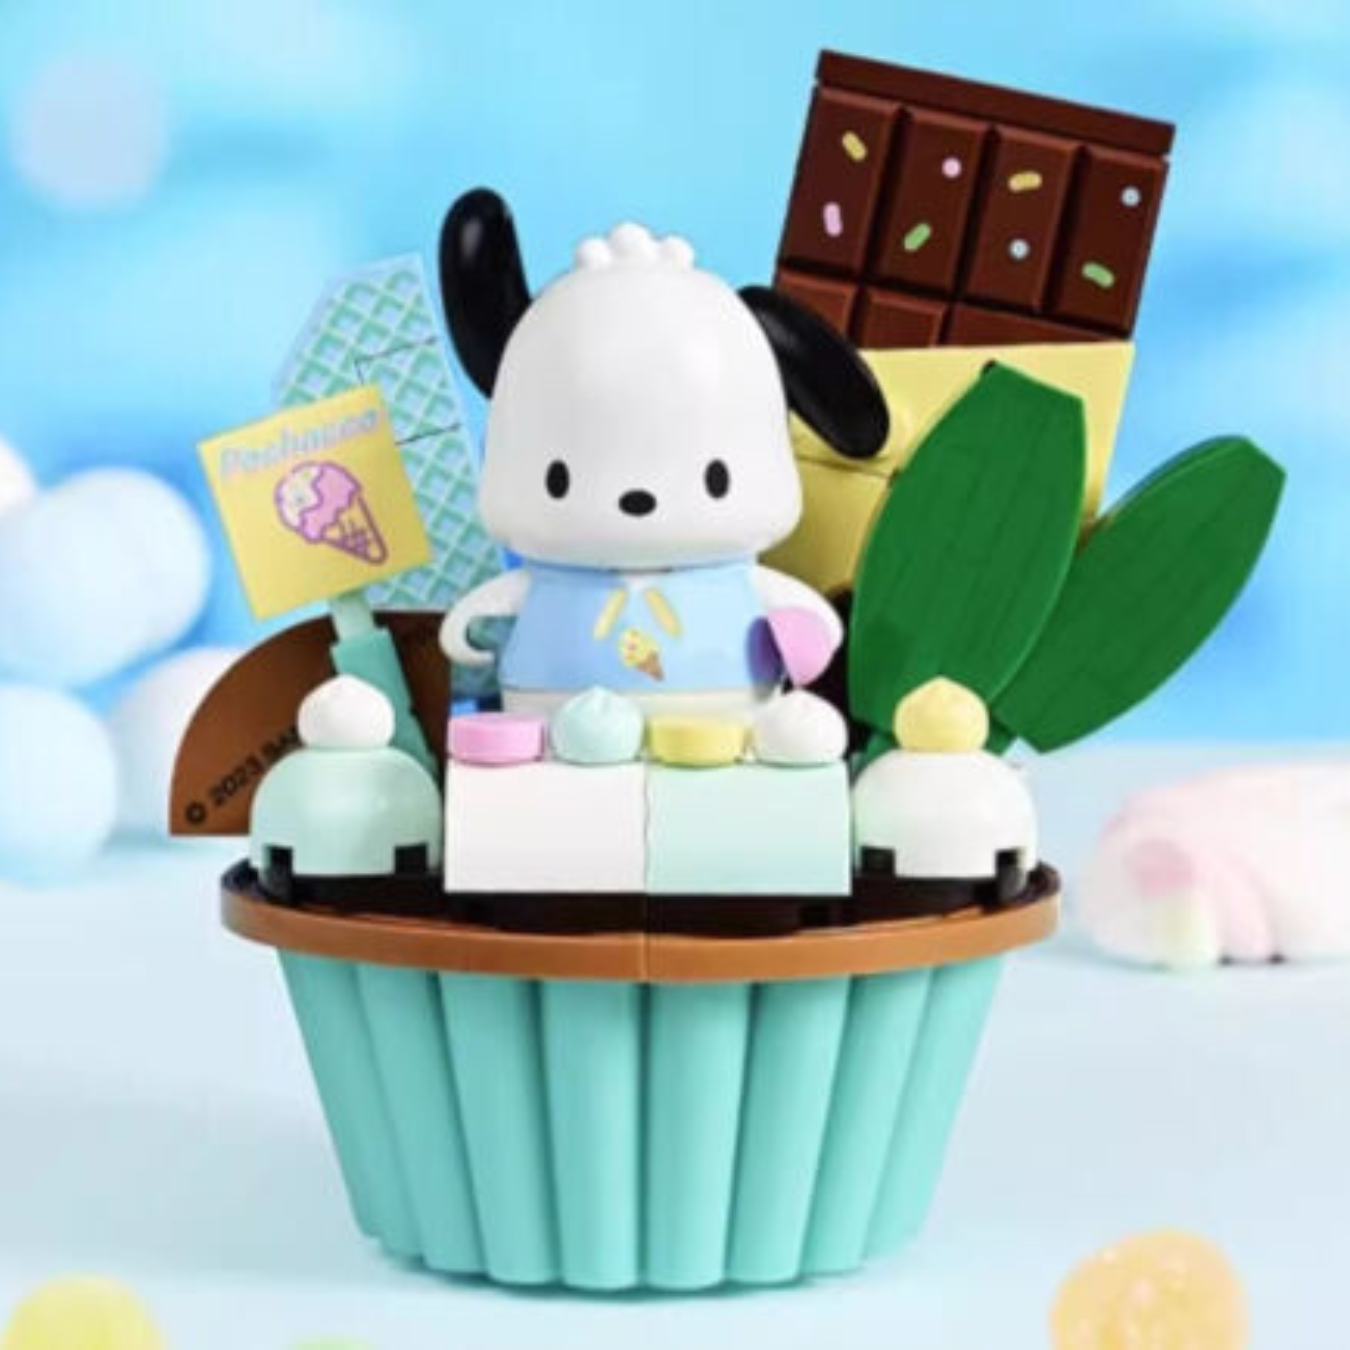 Keeppley X Sanrio Characters Building Blocks Set: Cupcakes